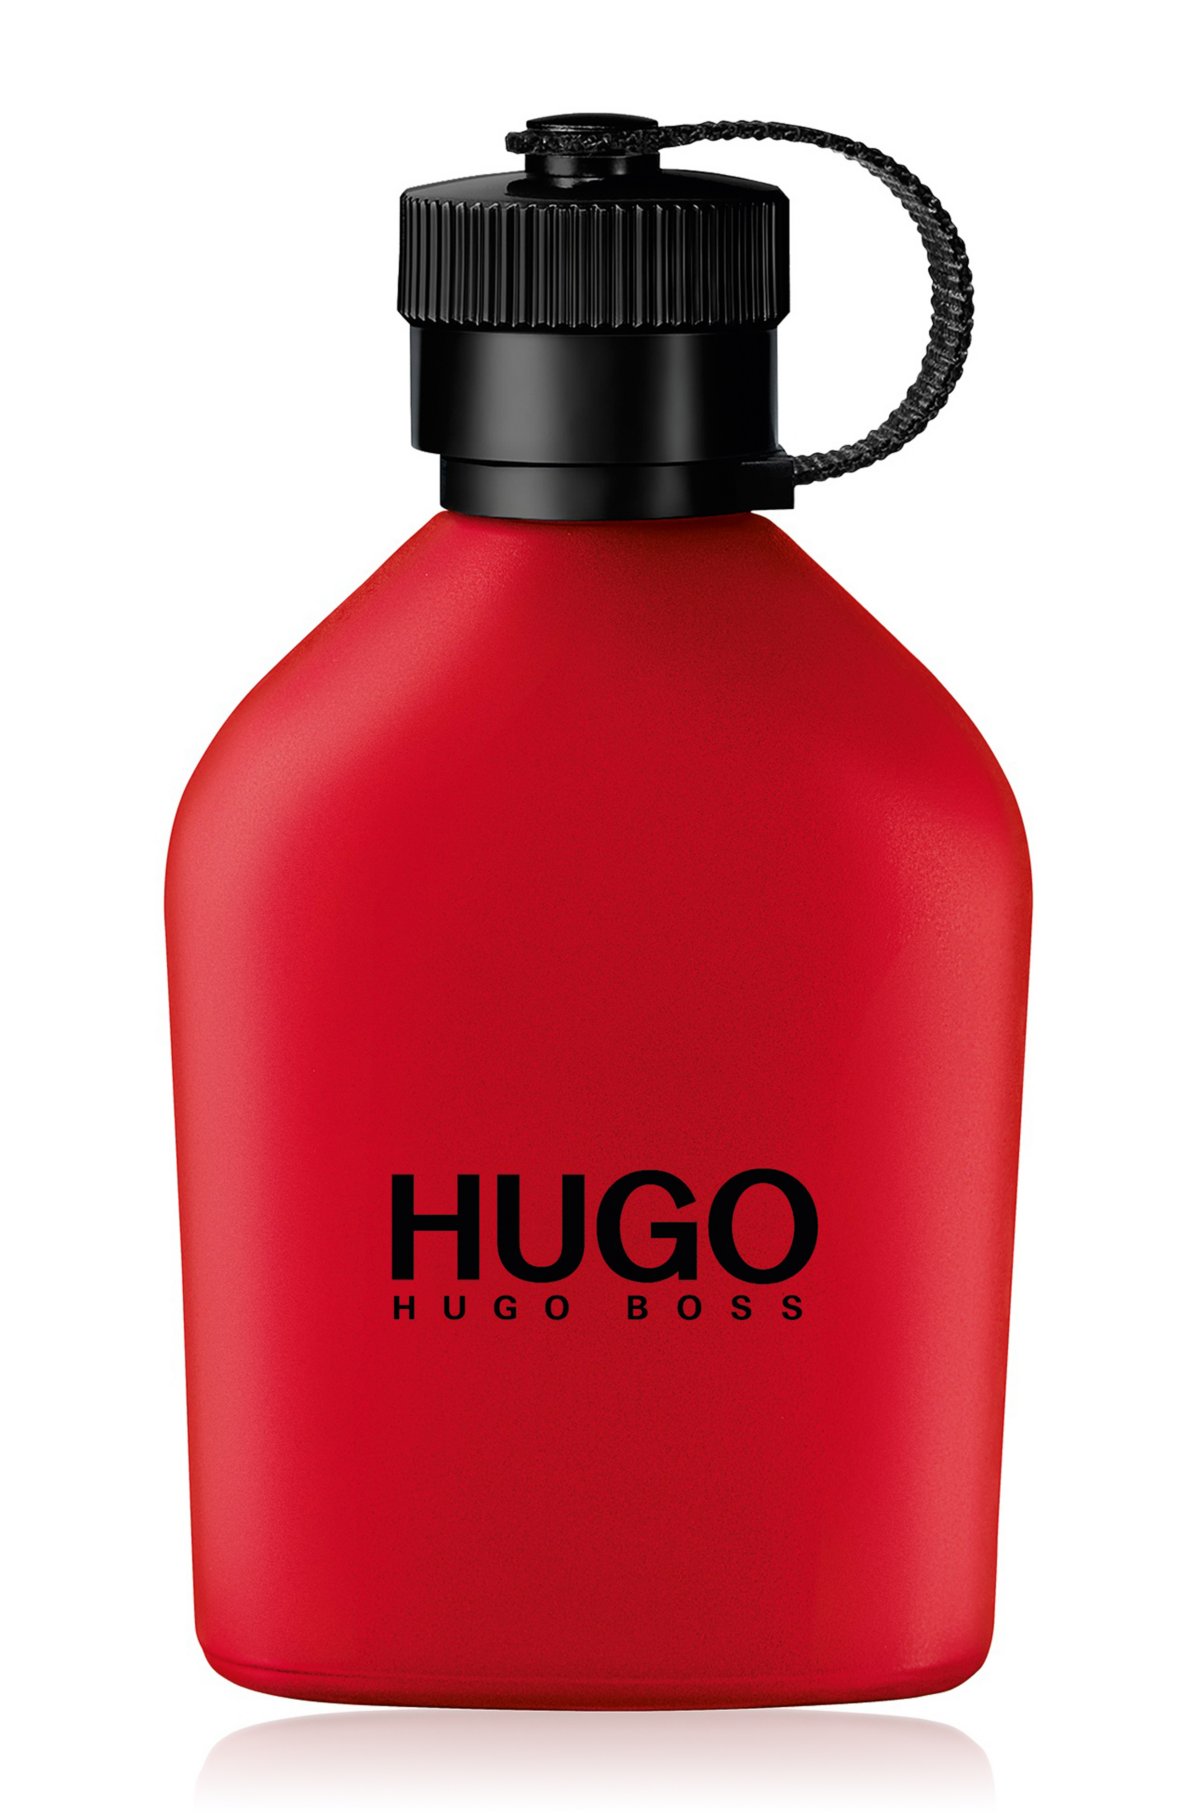 Hugo Just Different Eau de Toilette by Hugo Boss men. Online Price